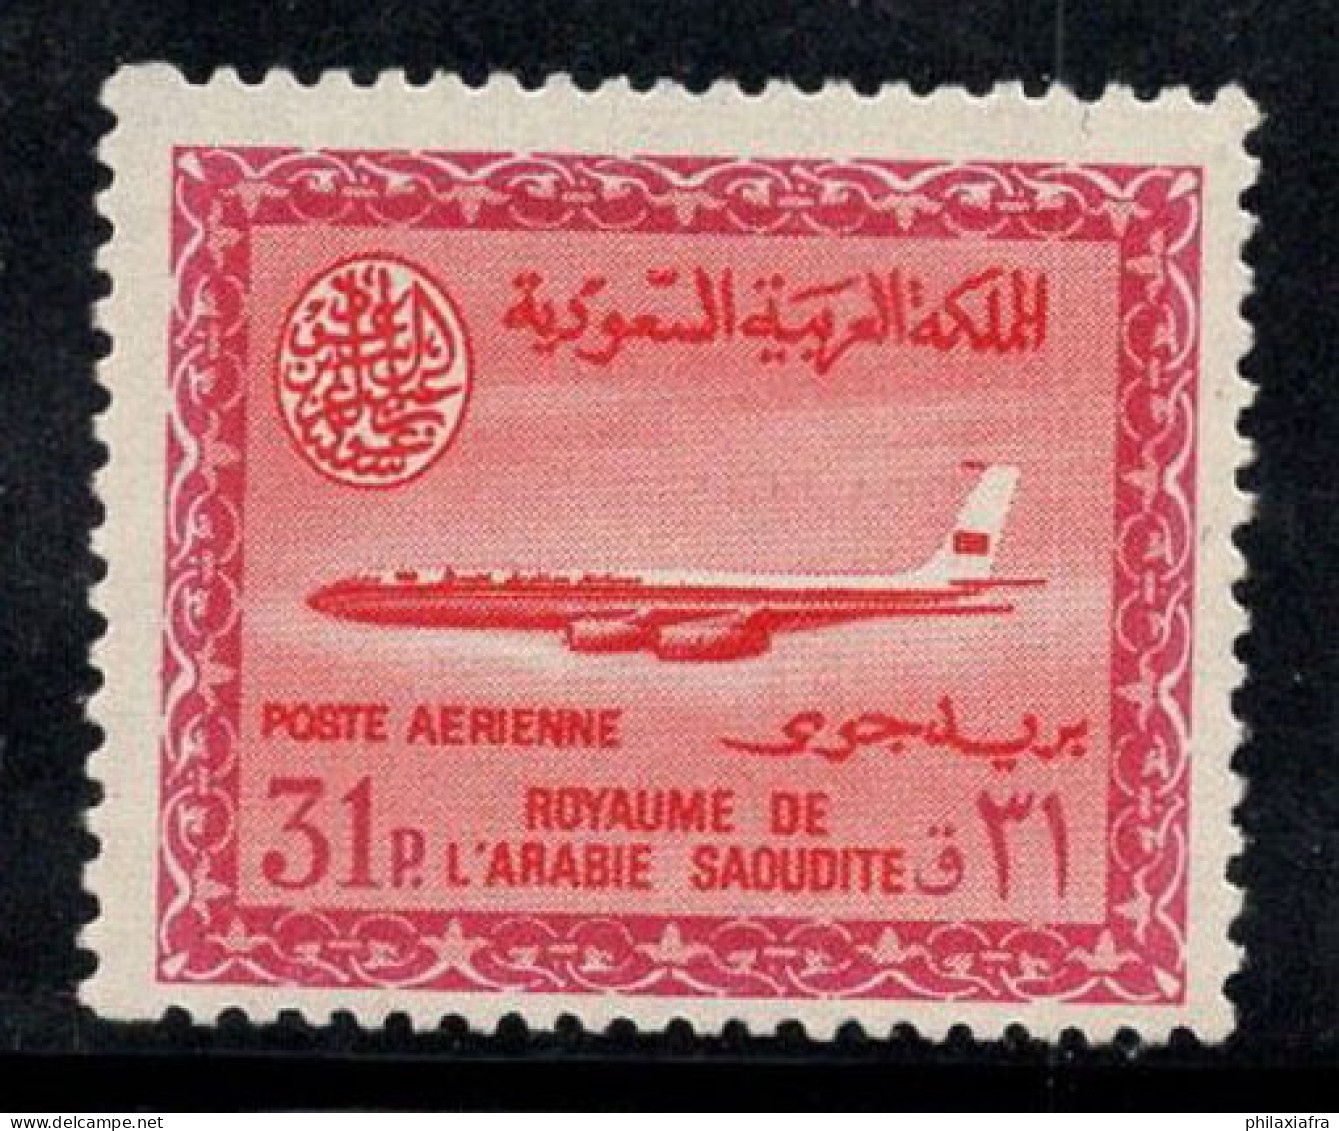 Arabie Saoudite 1965-72 Mi. 265 Neuf ** 100% Poste Aérienne 31 Pia, Boeing 720 B - Saudi Arabia